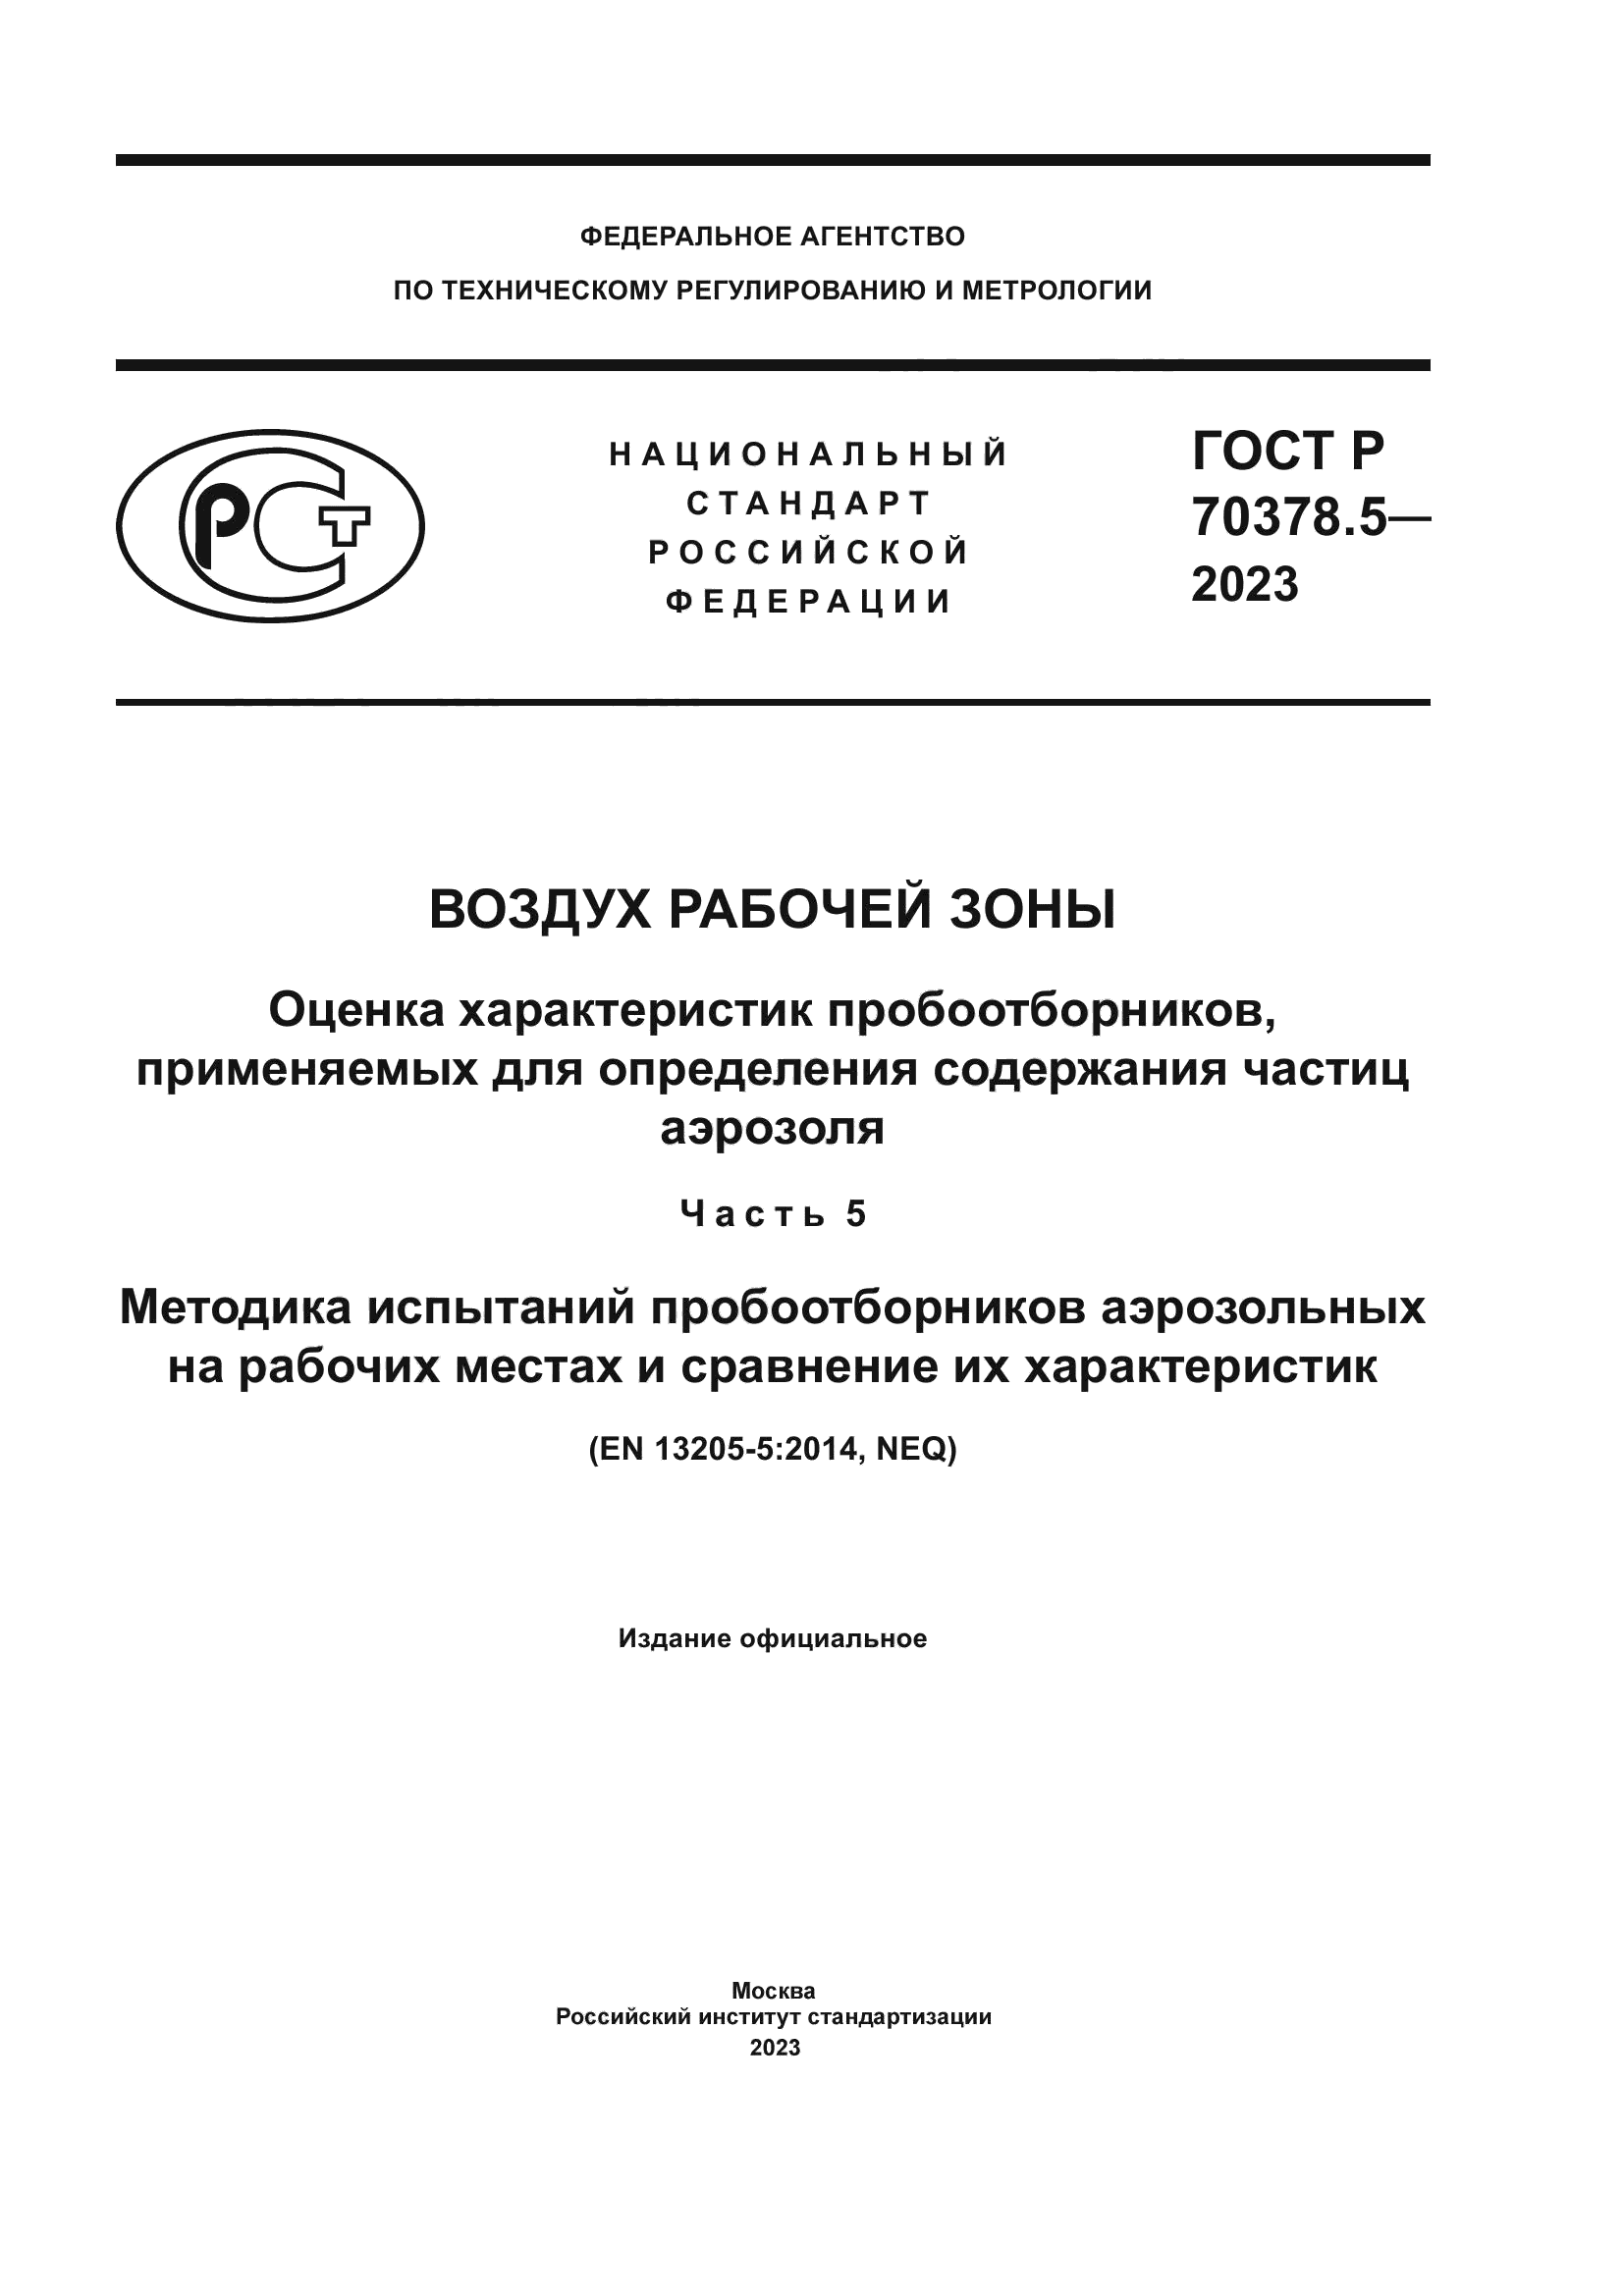 ГОСТ Р 70378.5-2023